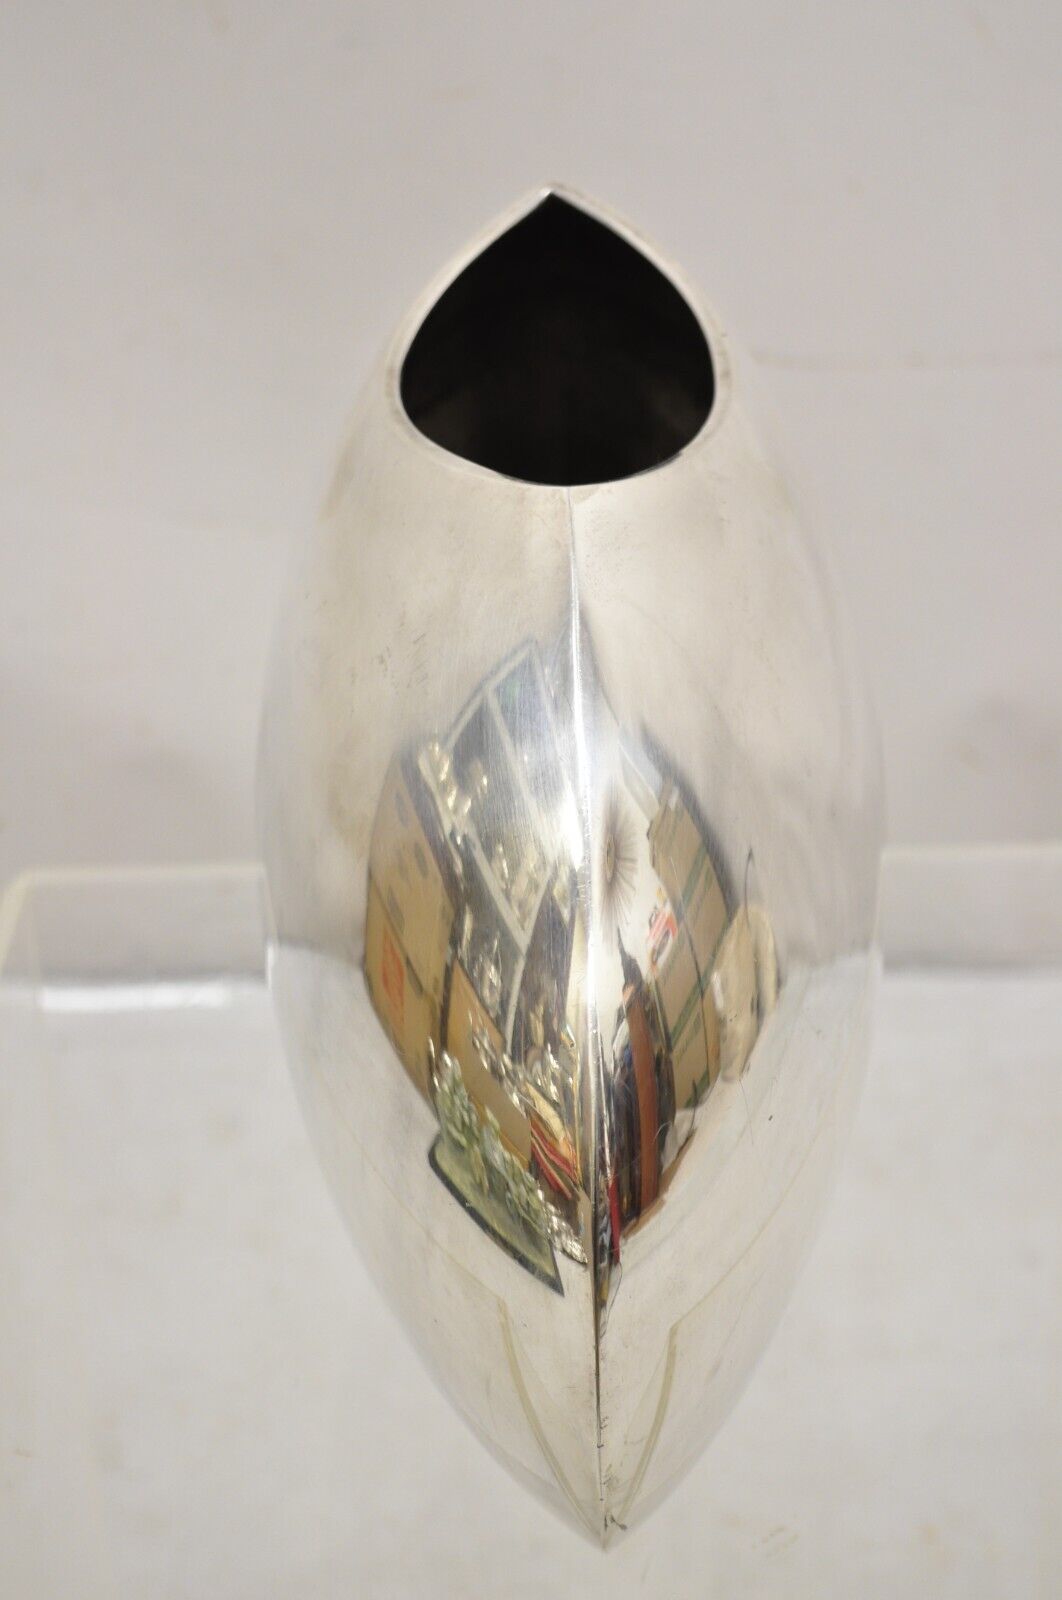 Vintage "Sin" Sabattini Bregnano Italy Oblong Silver Plated Modern Vase Vessel